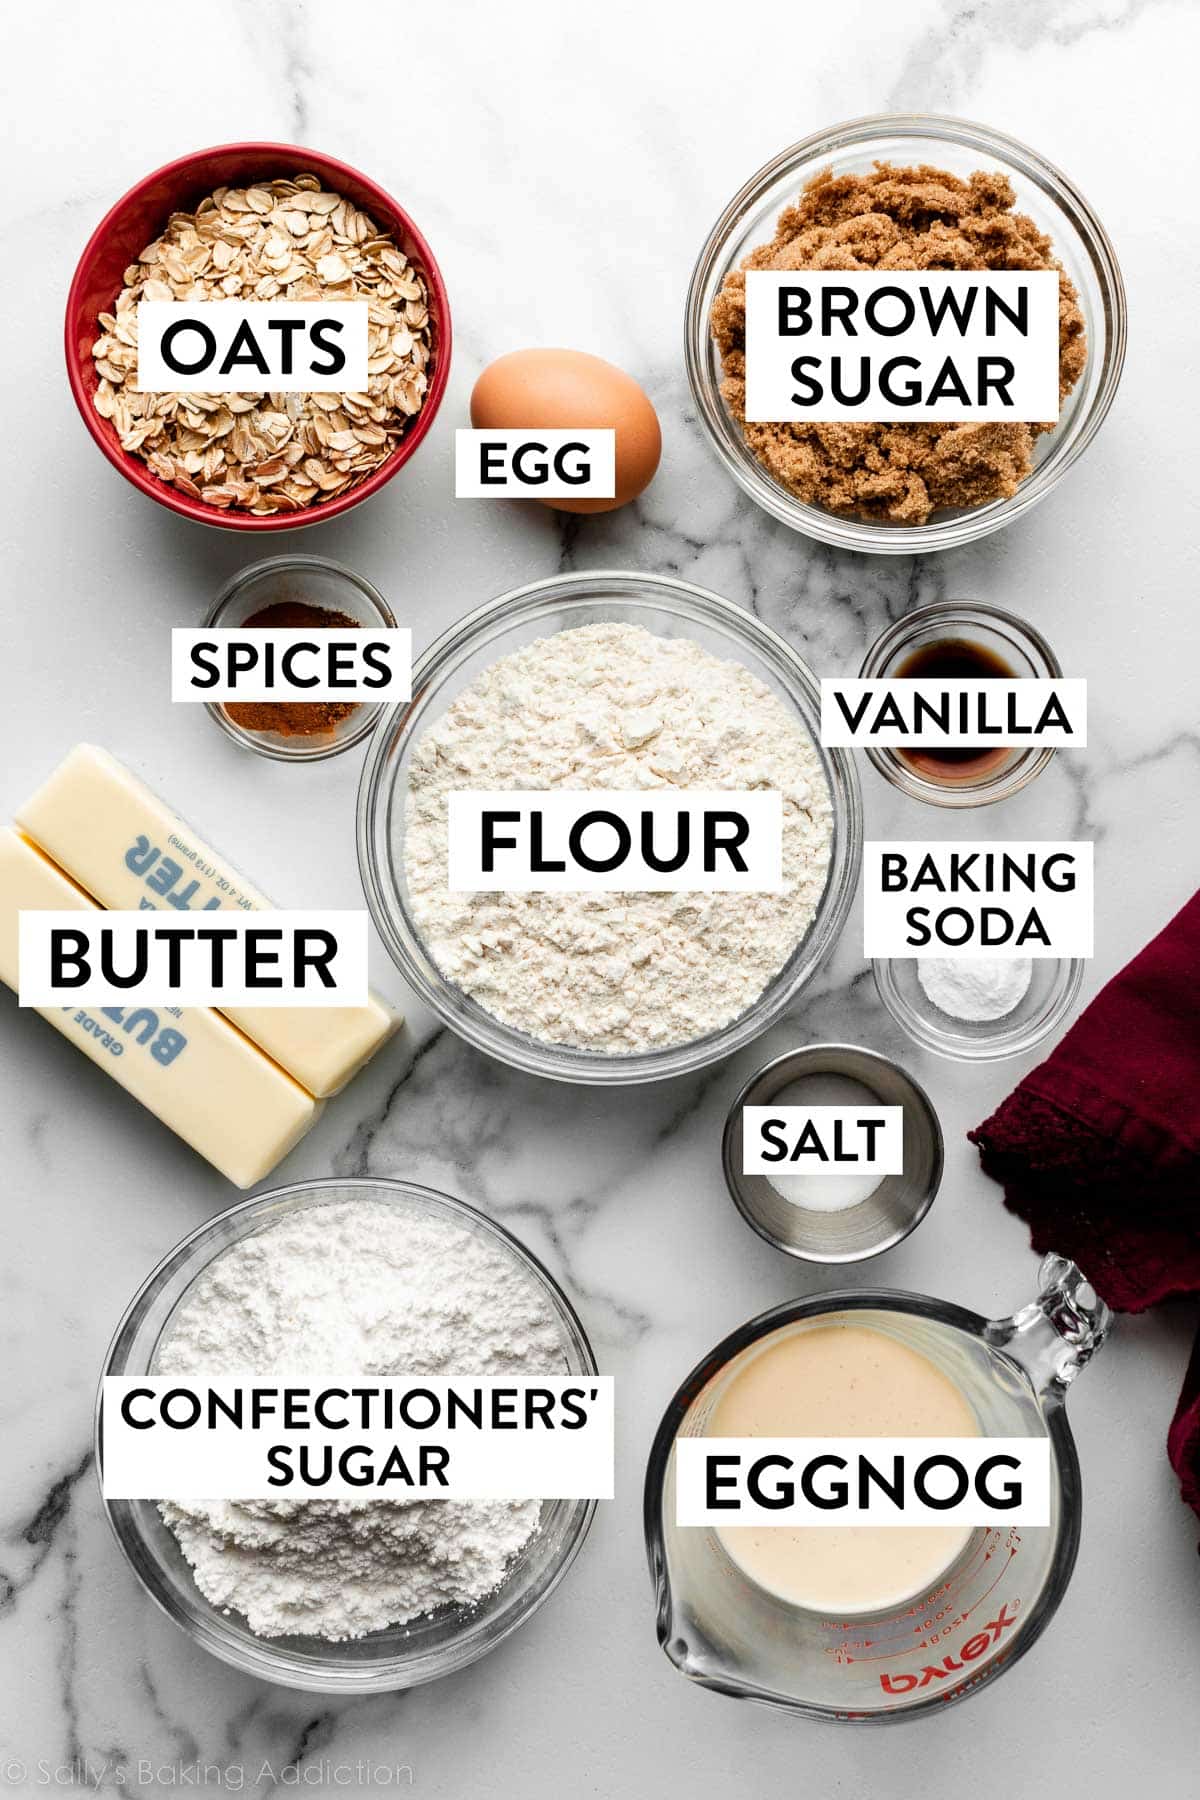 bowls of ingredients including brown sugar, oats, vanilla, flour, confectioners' sugar, salt, eggnog, and more.